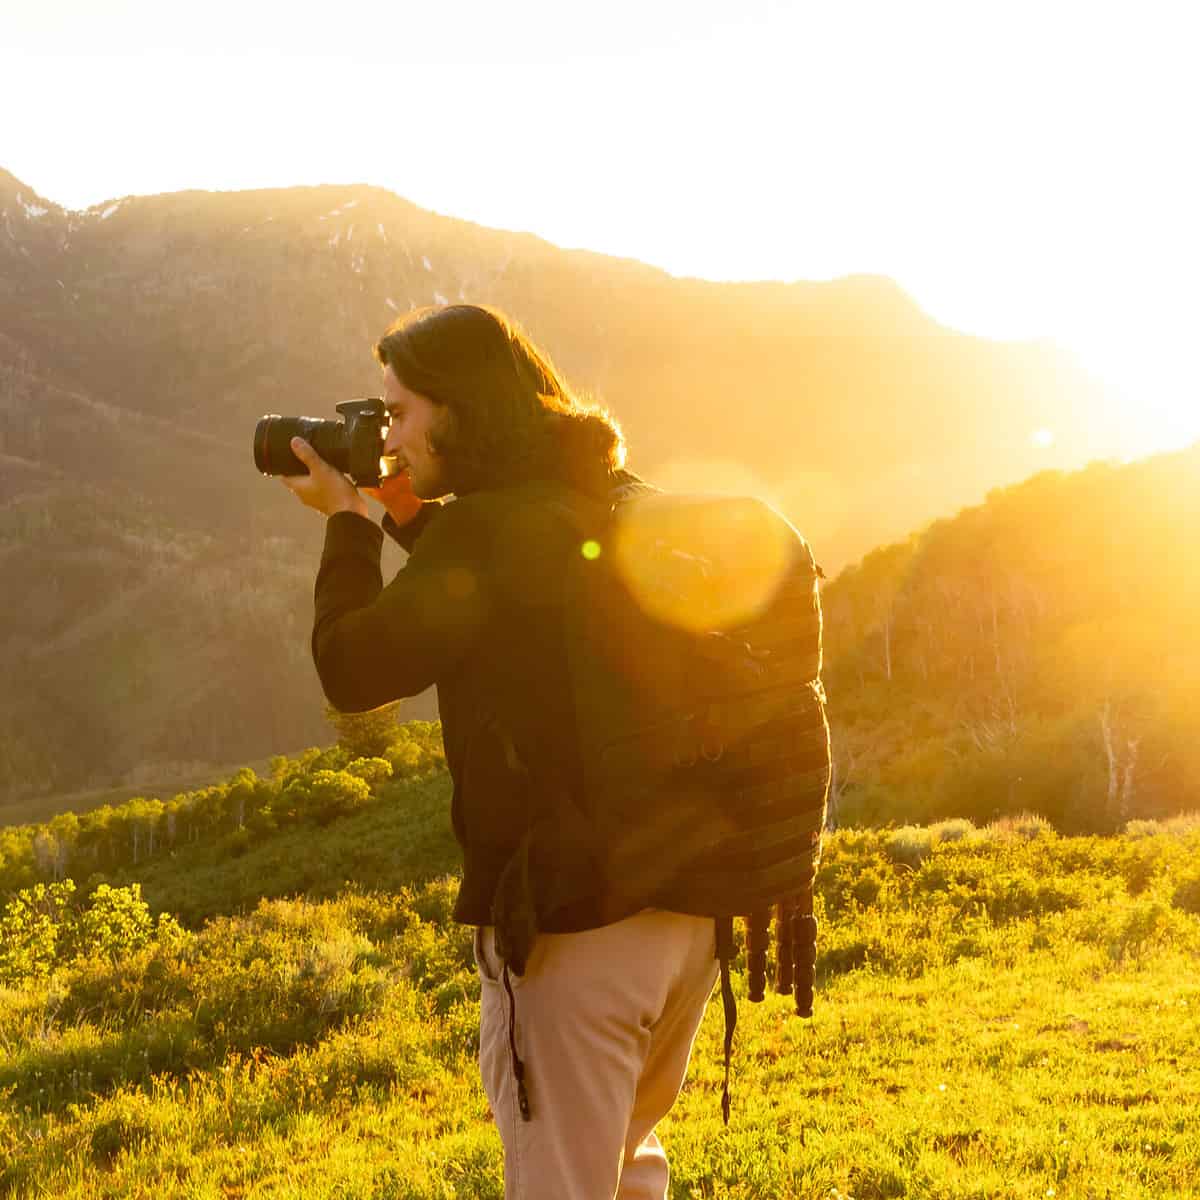 A Photographer shooting a sunset.